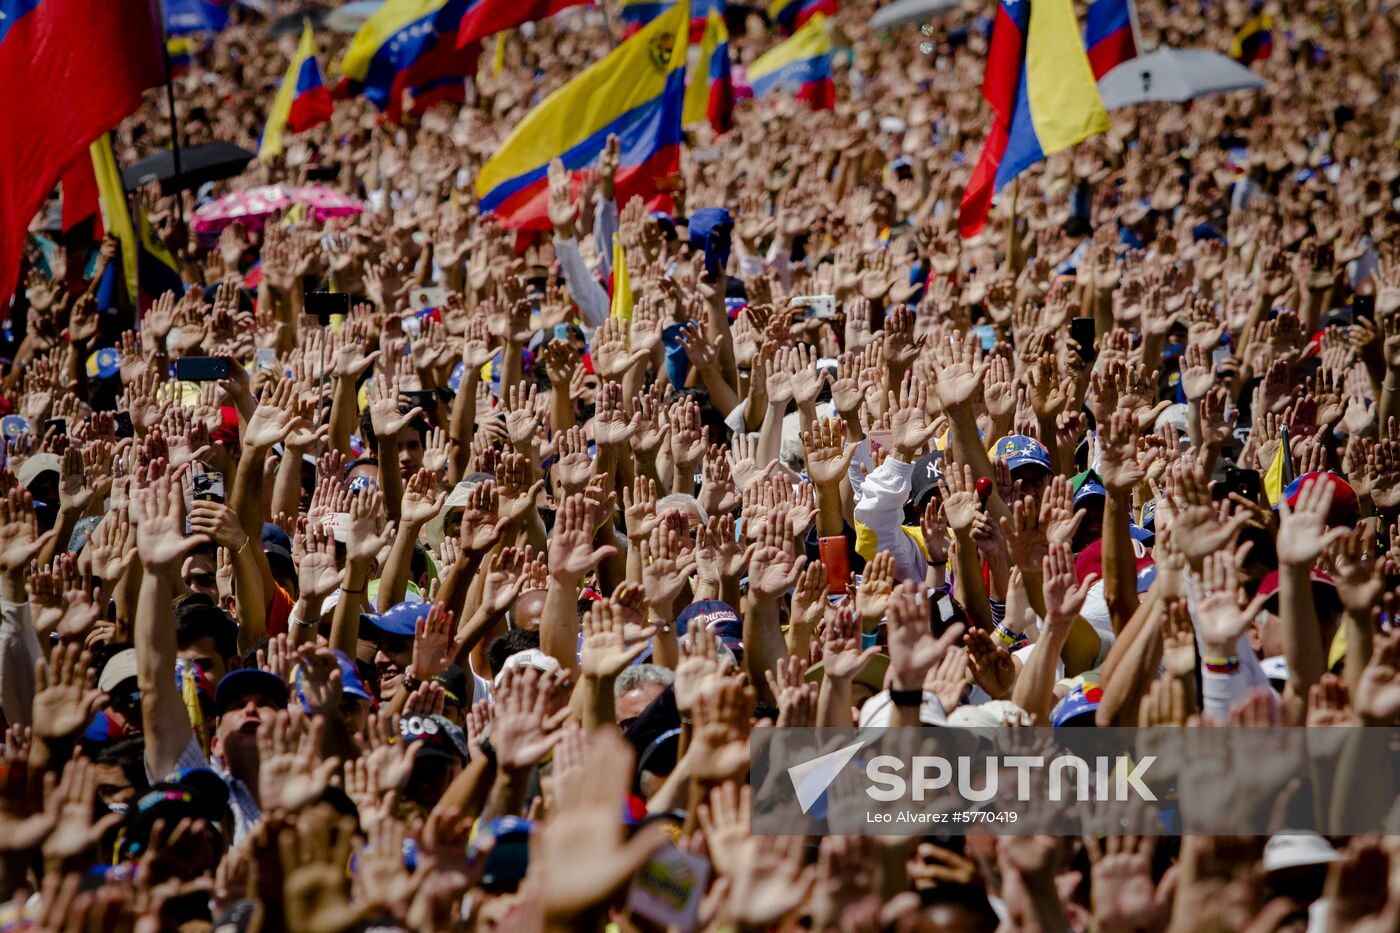 Venezuela Guaido Supporters